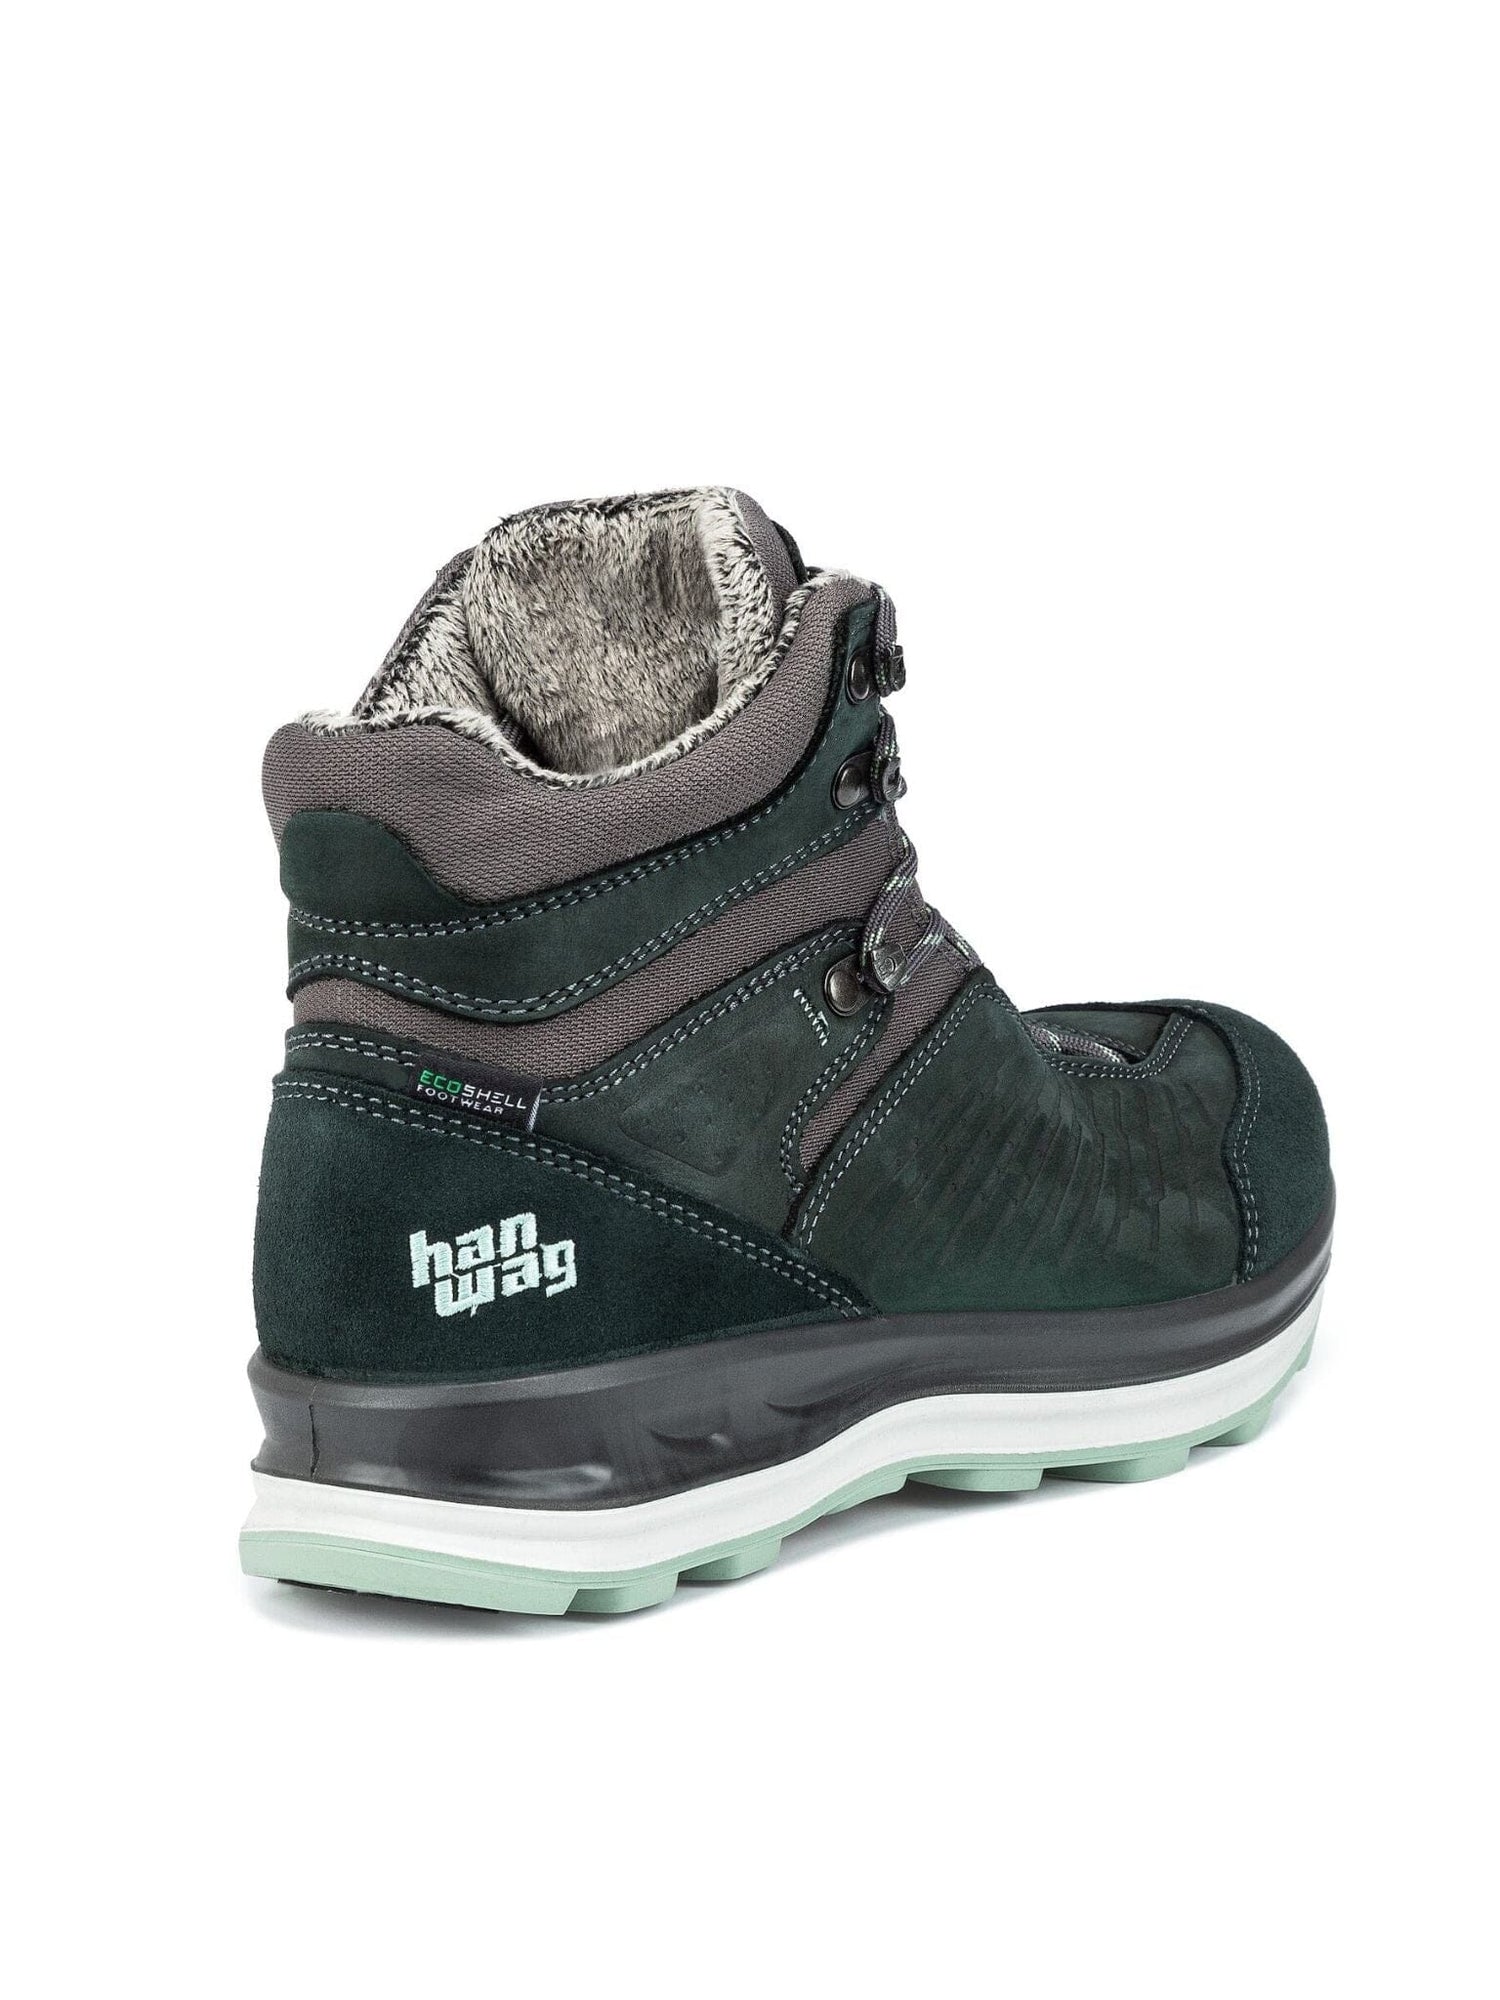 Hanwag - W's Bluestrait Mid ES Winter Shoes - OEKO-TEX Certified Leather - Weekendbee - sustainable sportswear